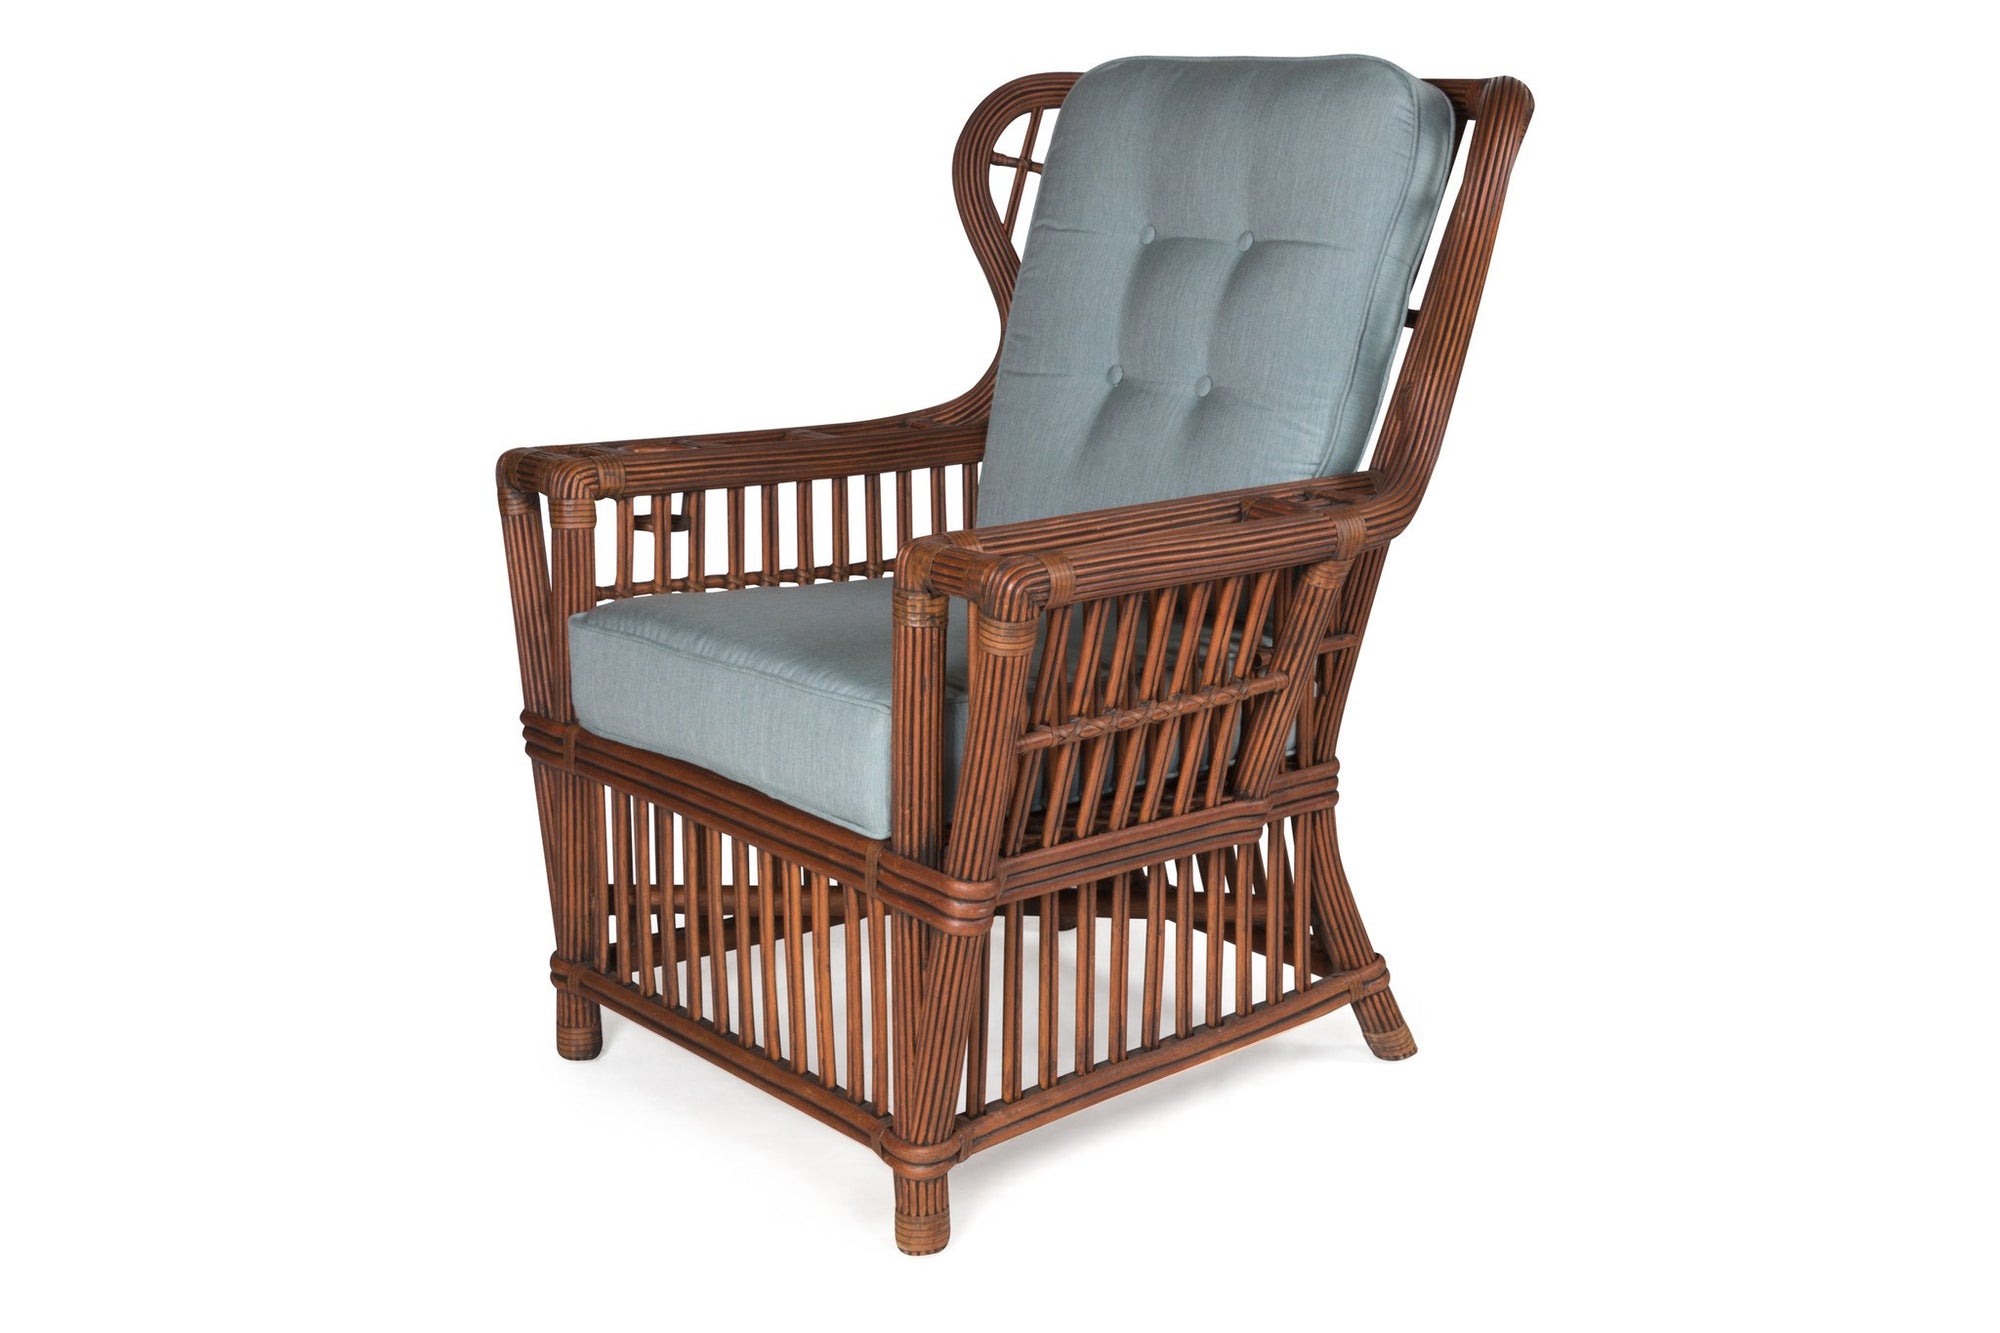 Designer Wicker & Rattan By Tribor Williamsburg Wing Chair by Designer Wicker from Tribor Chair - Rattan Imports